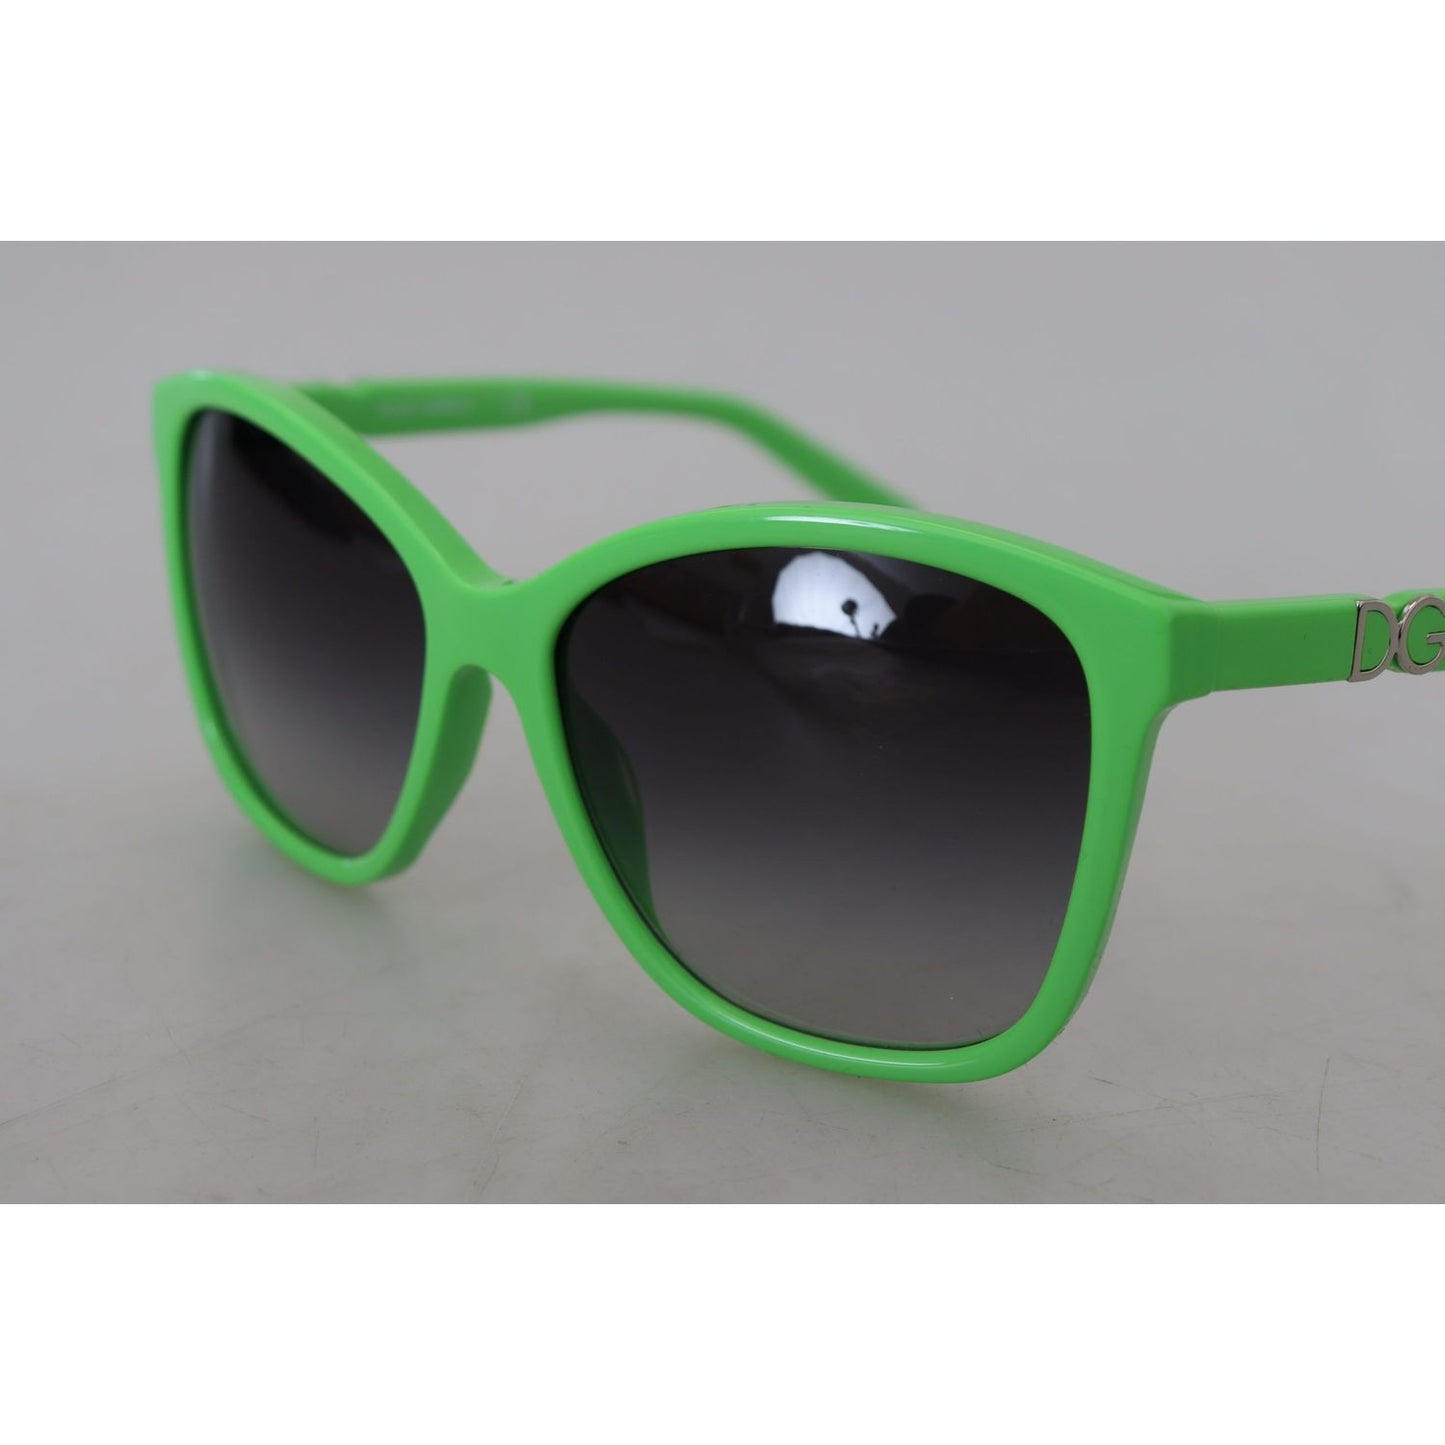 Dolce & Gabbana Chic Green Acetate Round Sunglasses green-acetate-frame-round-shades-dg4170pm-sunglasses IMG_3468-scaled-ddfe27f3-404.jpg